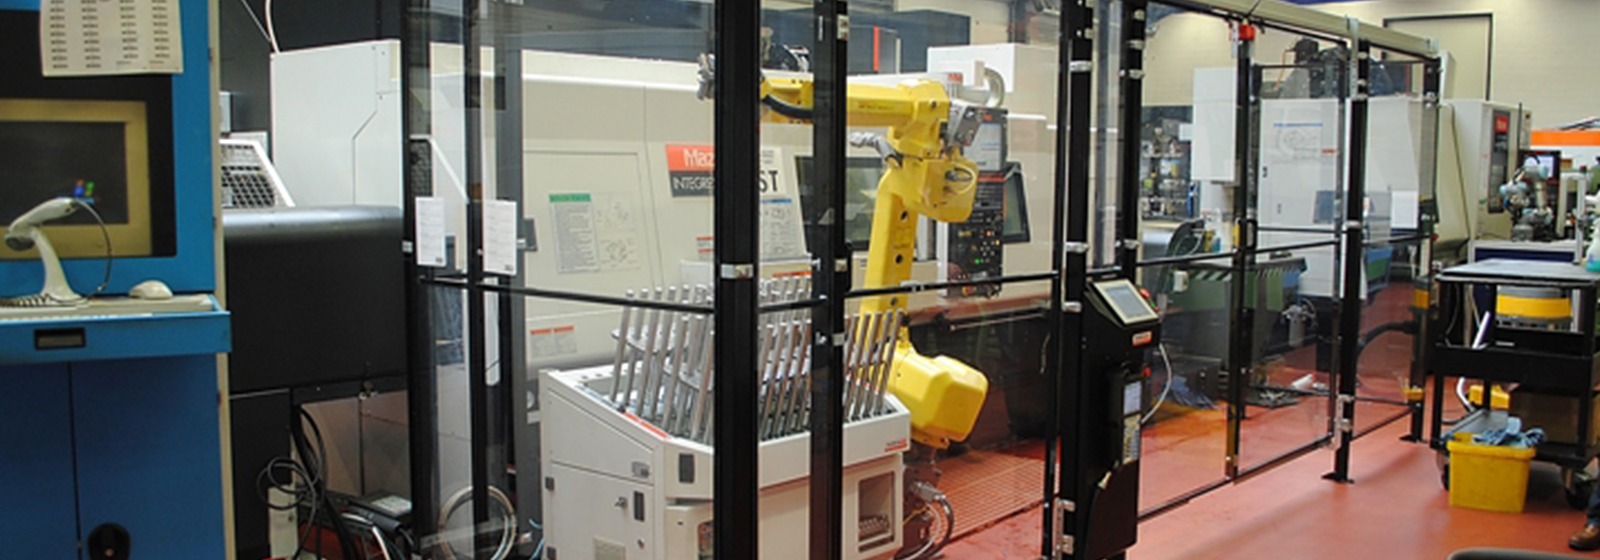 M-10 robot tending a CNC lathe